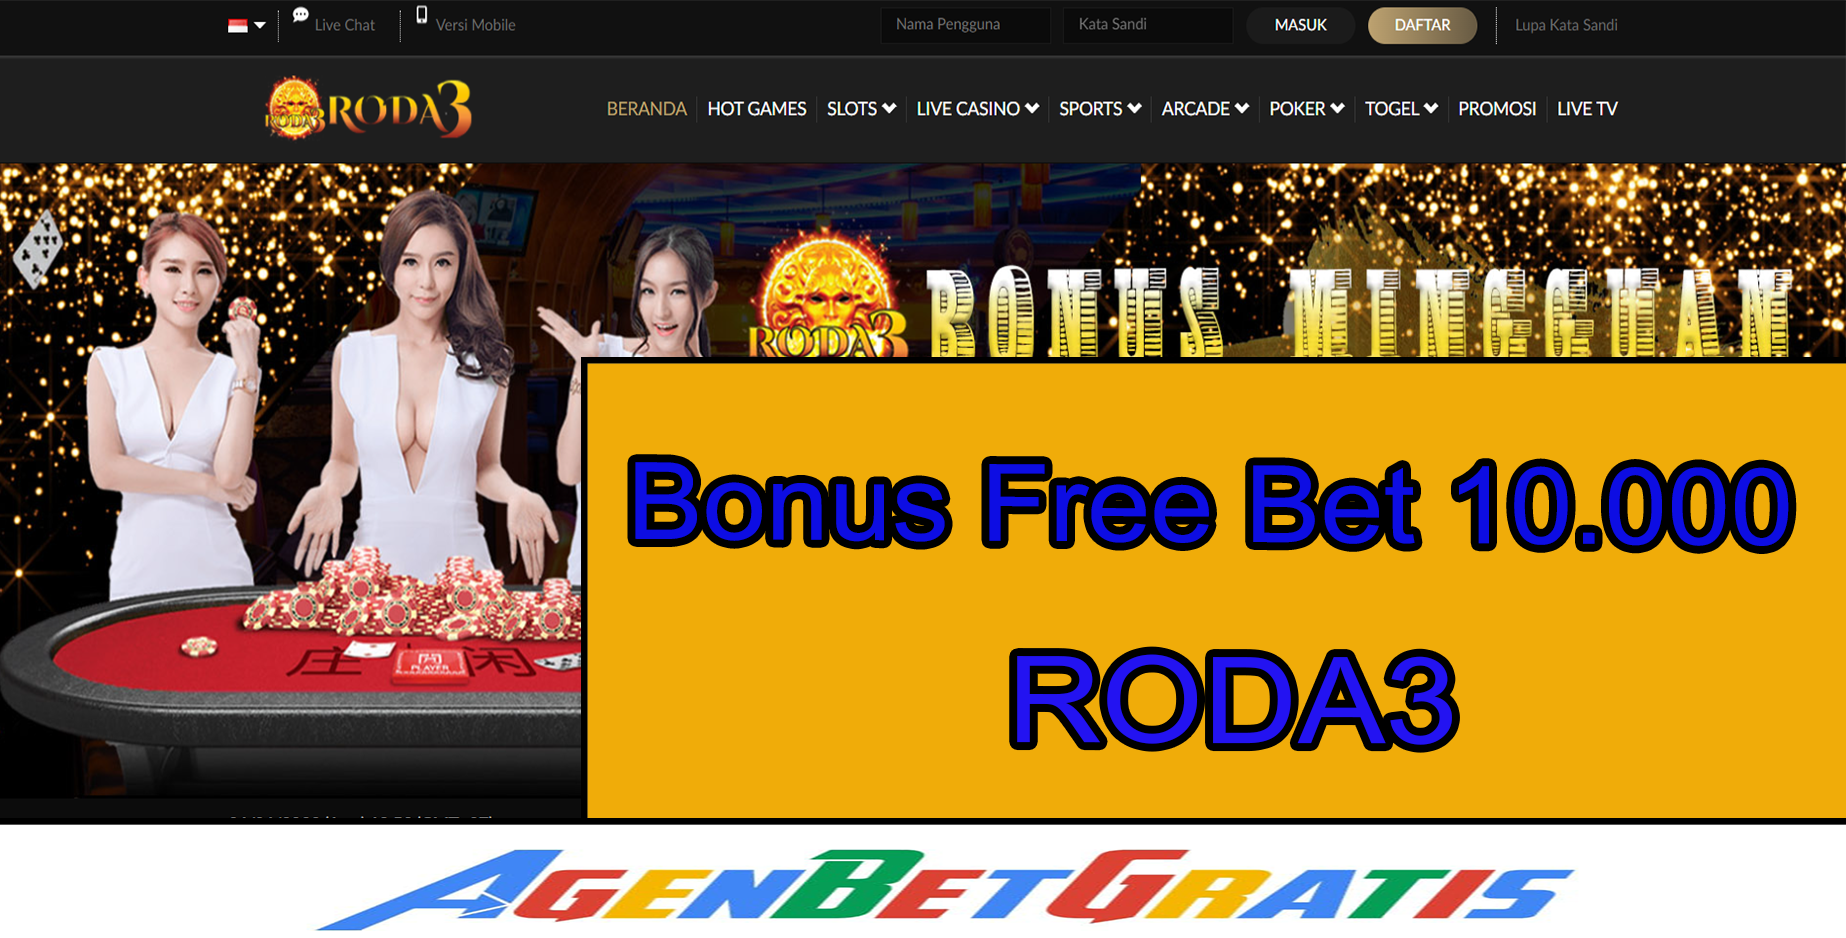 RODA3 - Bonus Free Bet 10.000